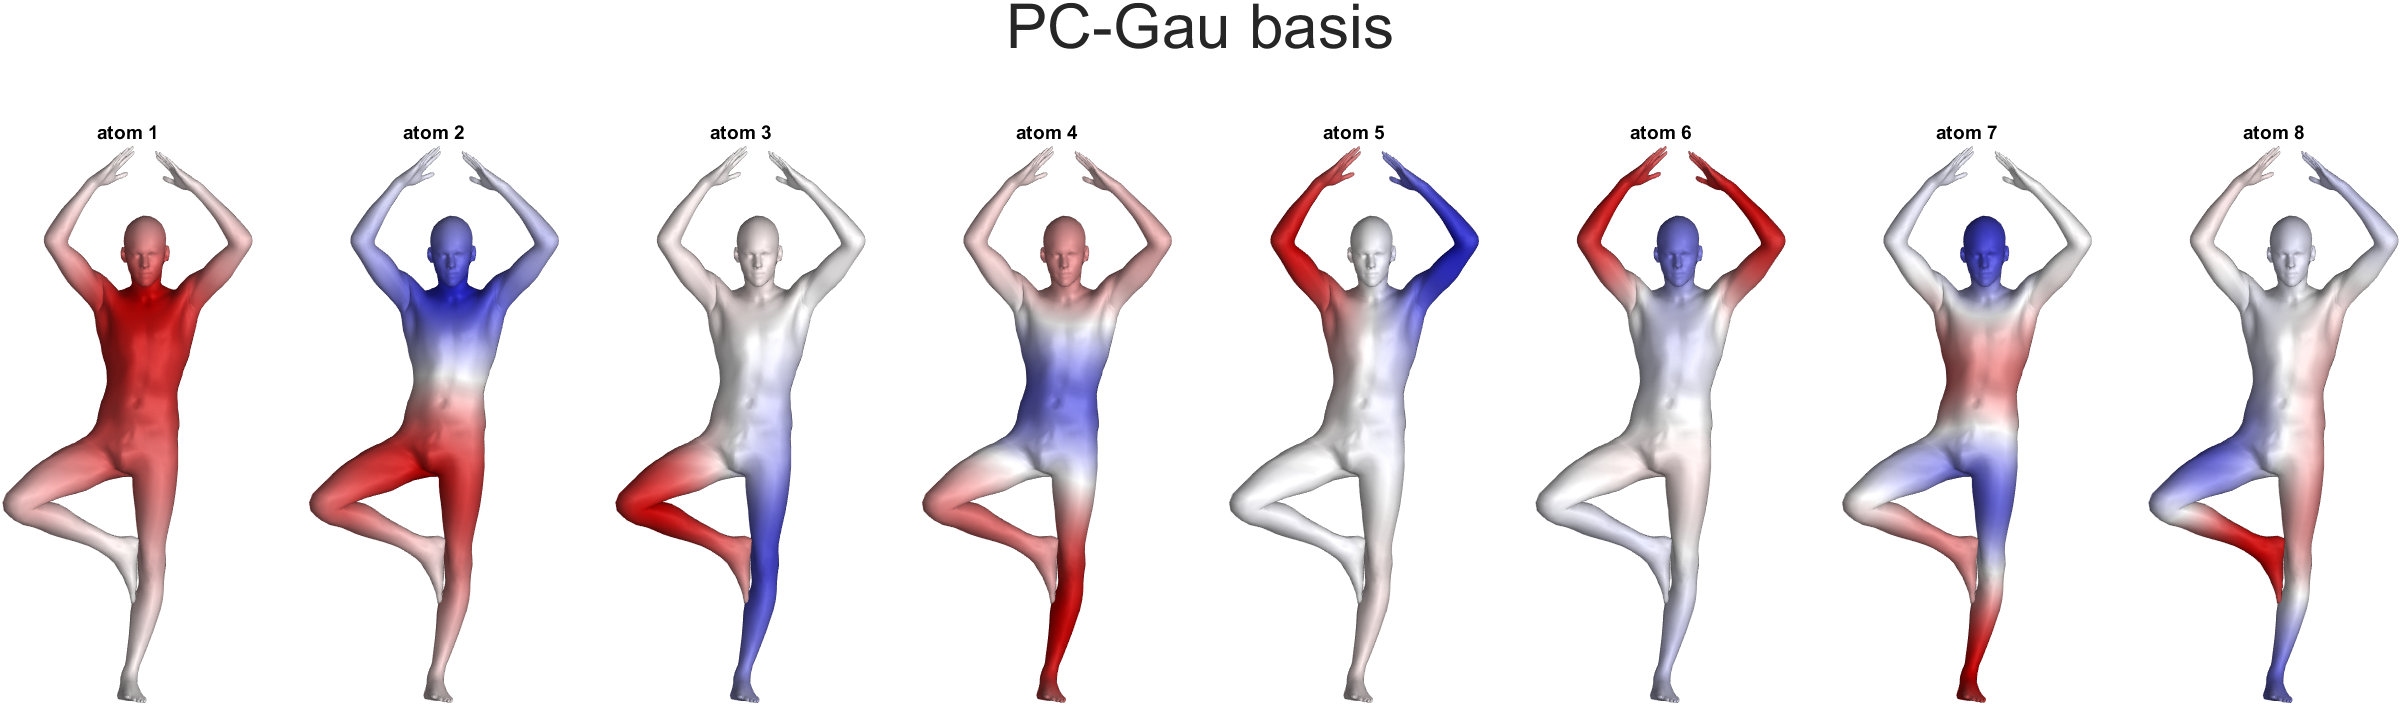 PC-Gau_atoms.png